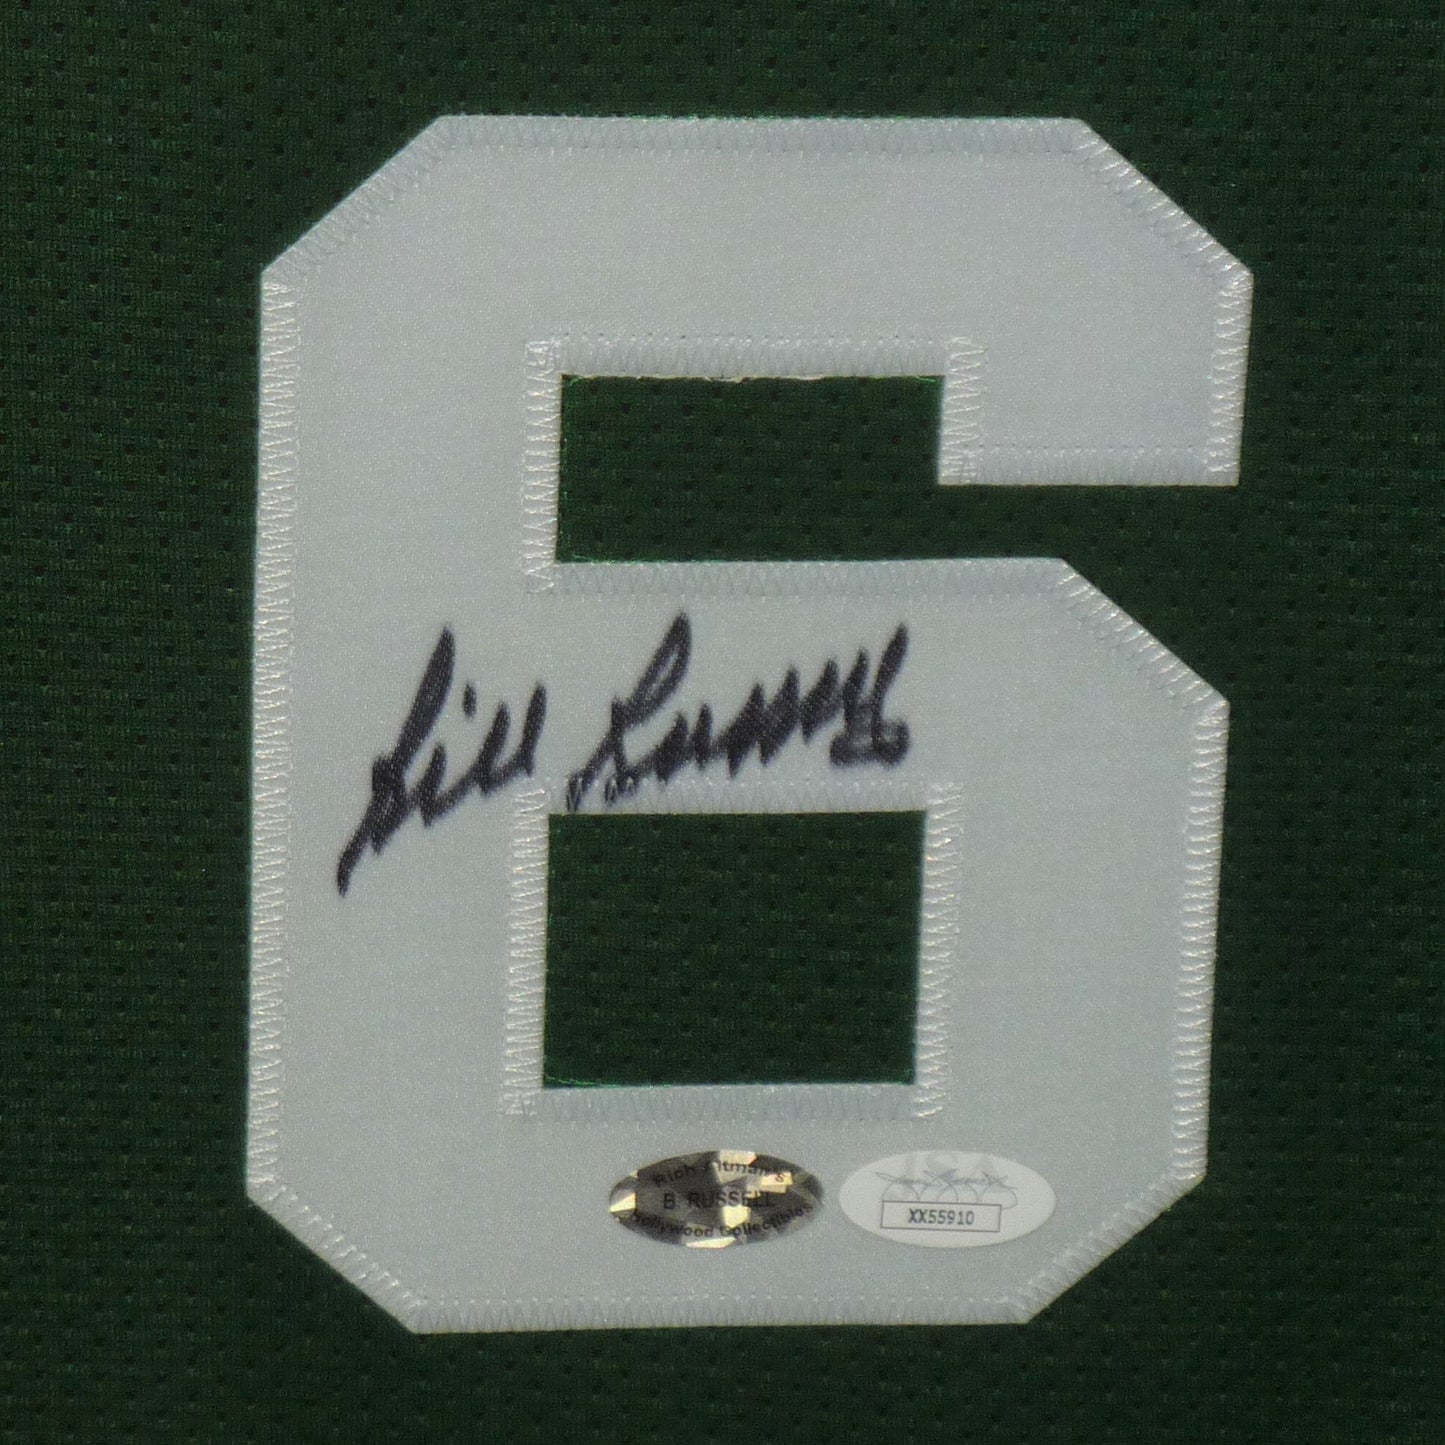 Bill Russell Autographed Green Boston Celtics Jersey (PSA